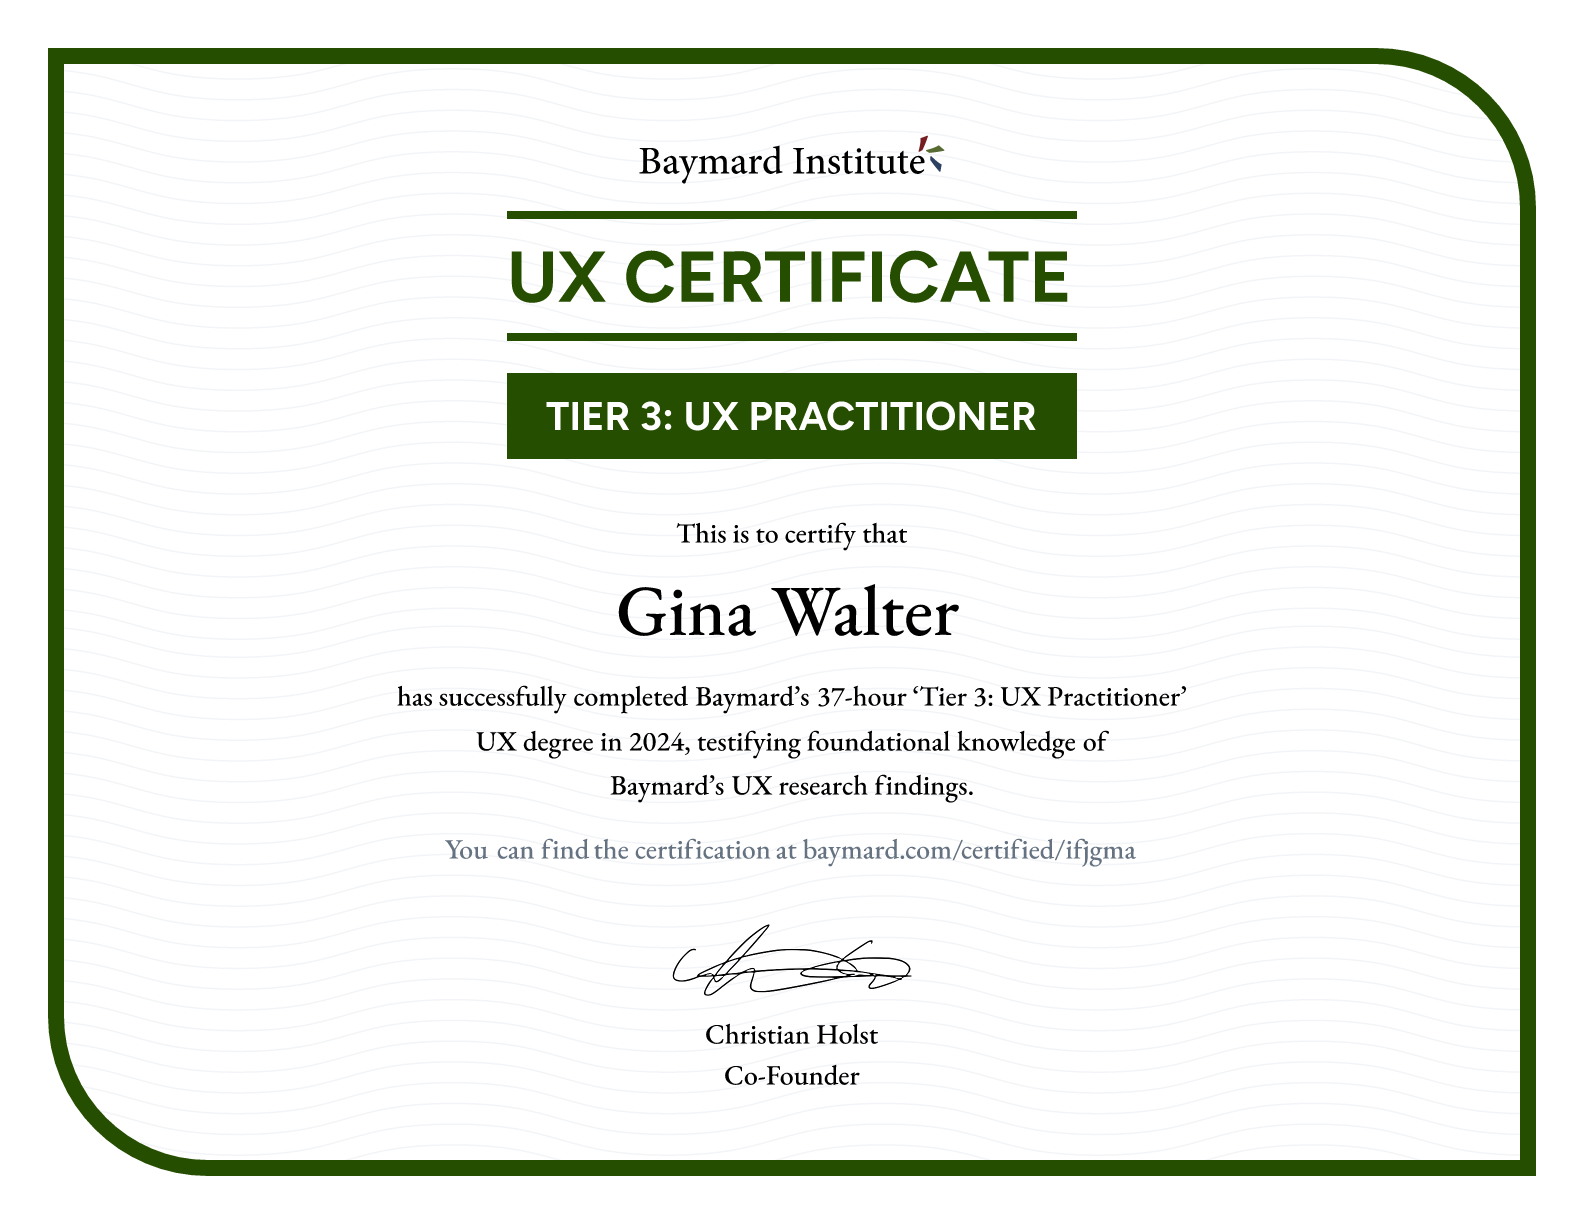 Gina Walter’s certificate